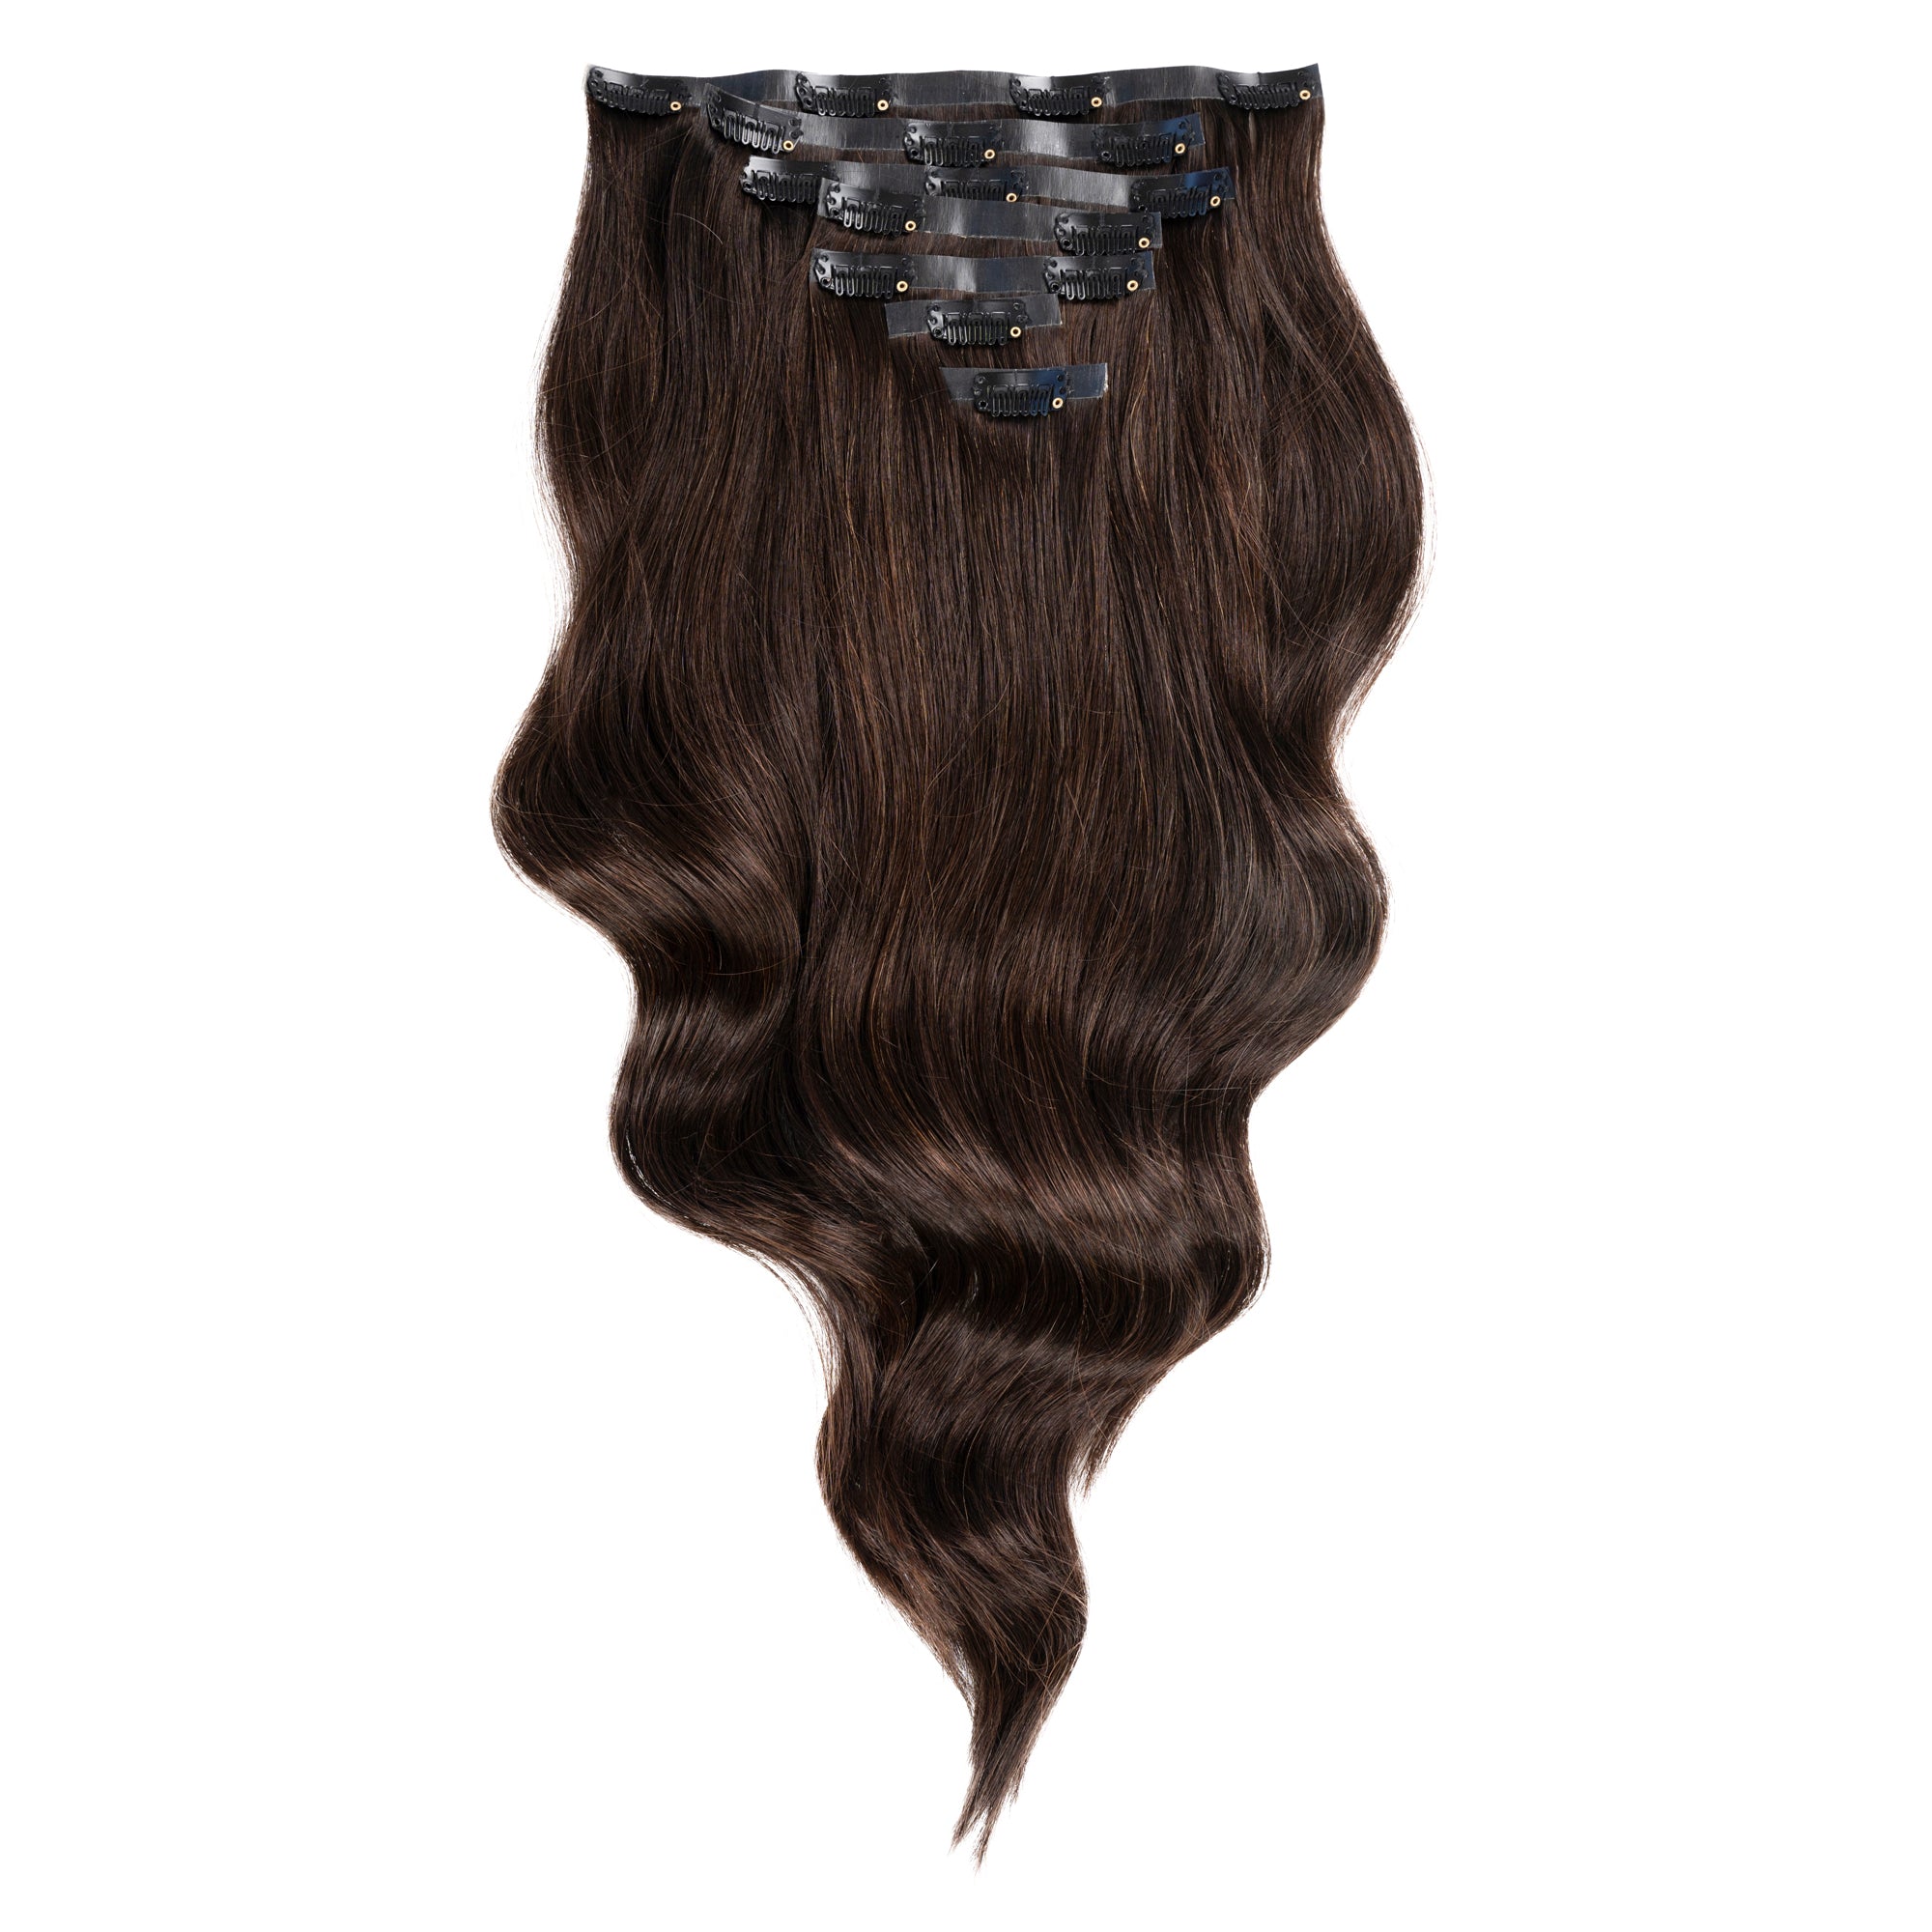 Duchess Elegant Clip-in Hair Extensions 16" Colour 1B Black/Brown - Maneology Hair Extensions